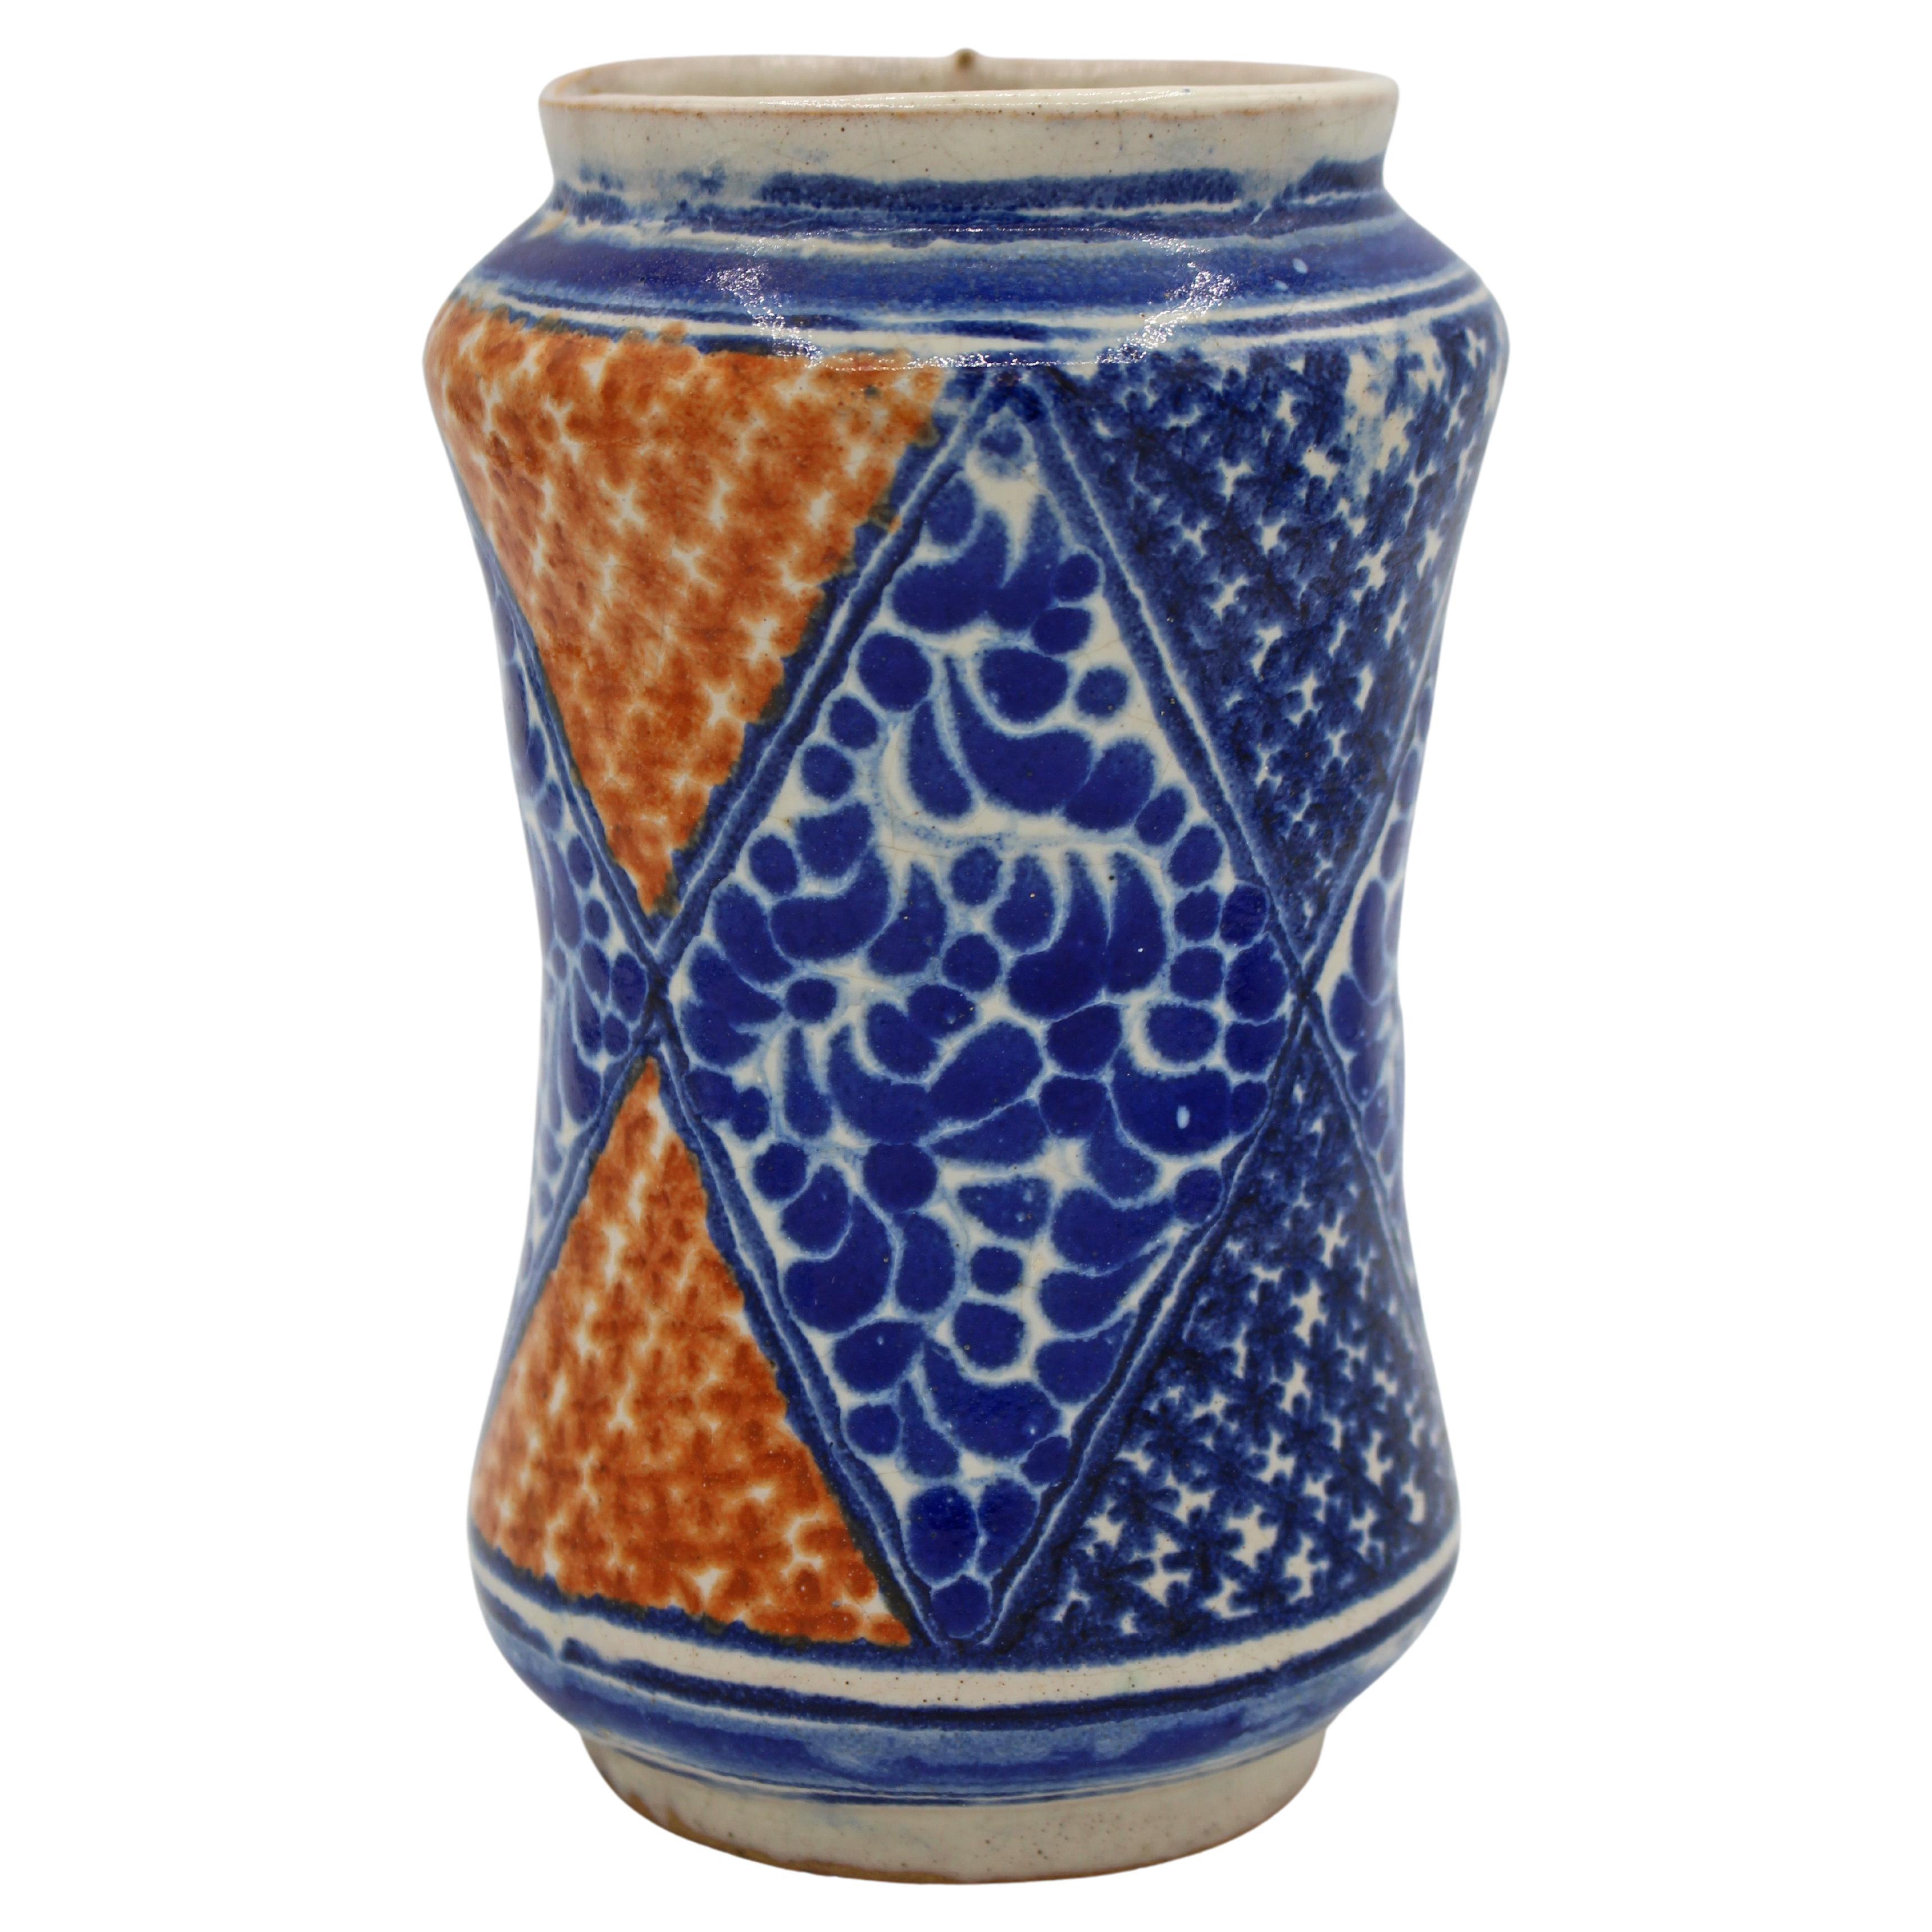 Circa 1890-1910 Uriarte Talavera Apothecary Jar